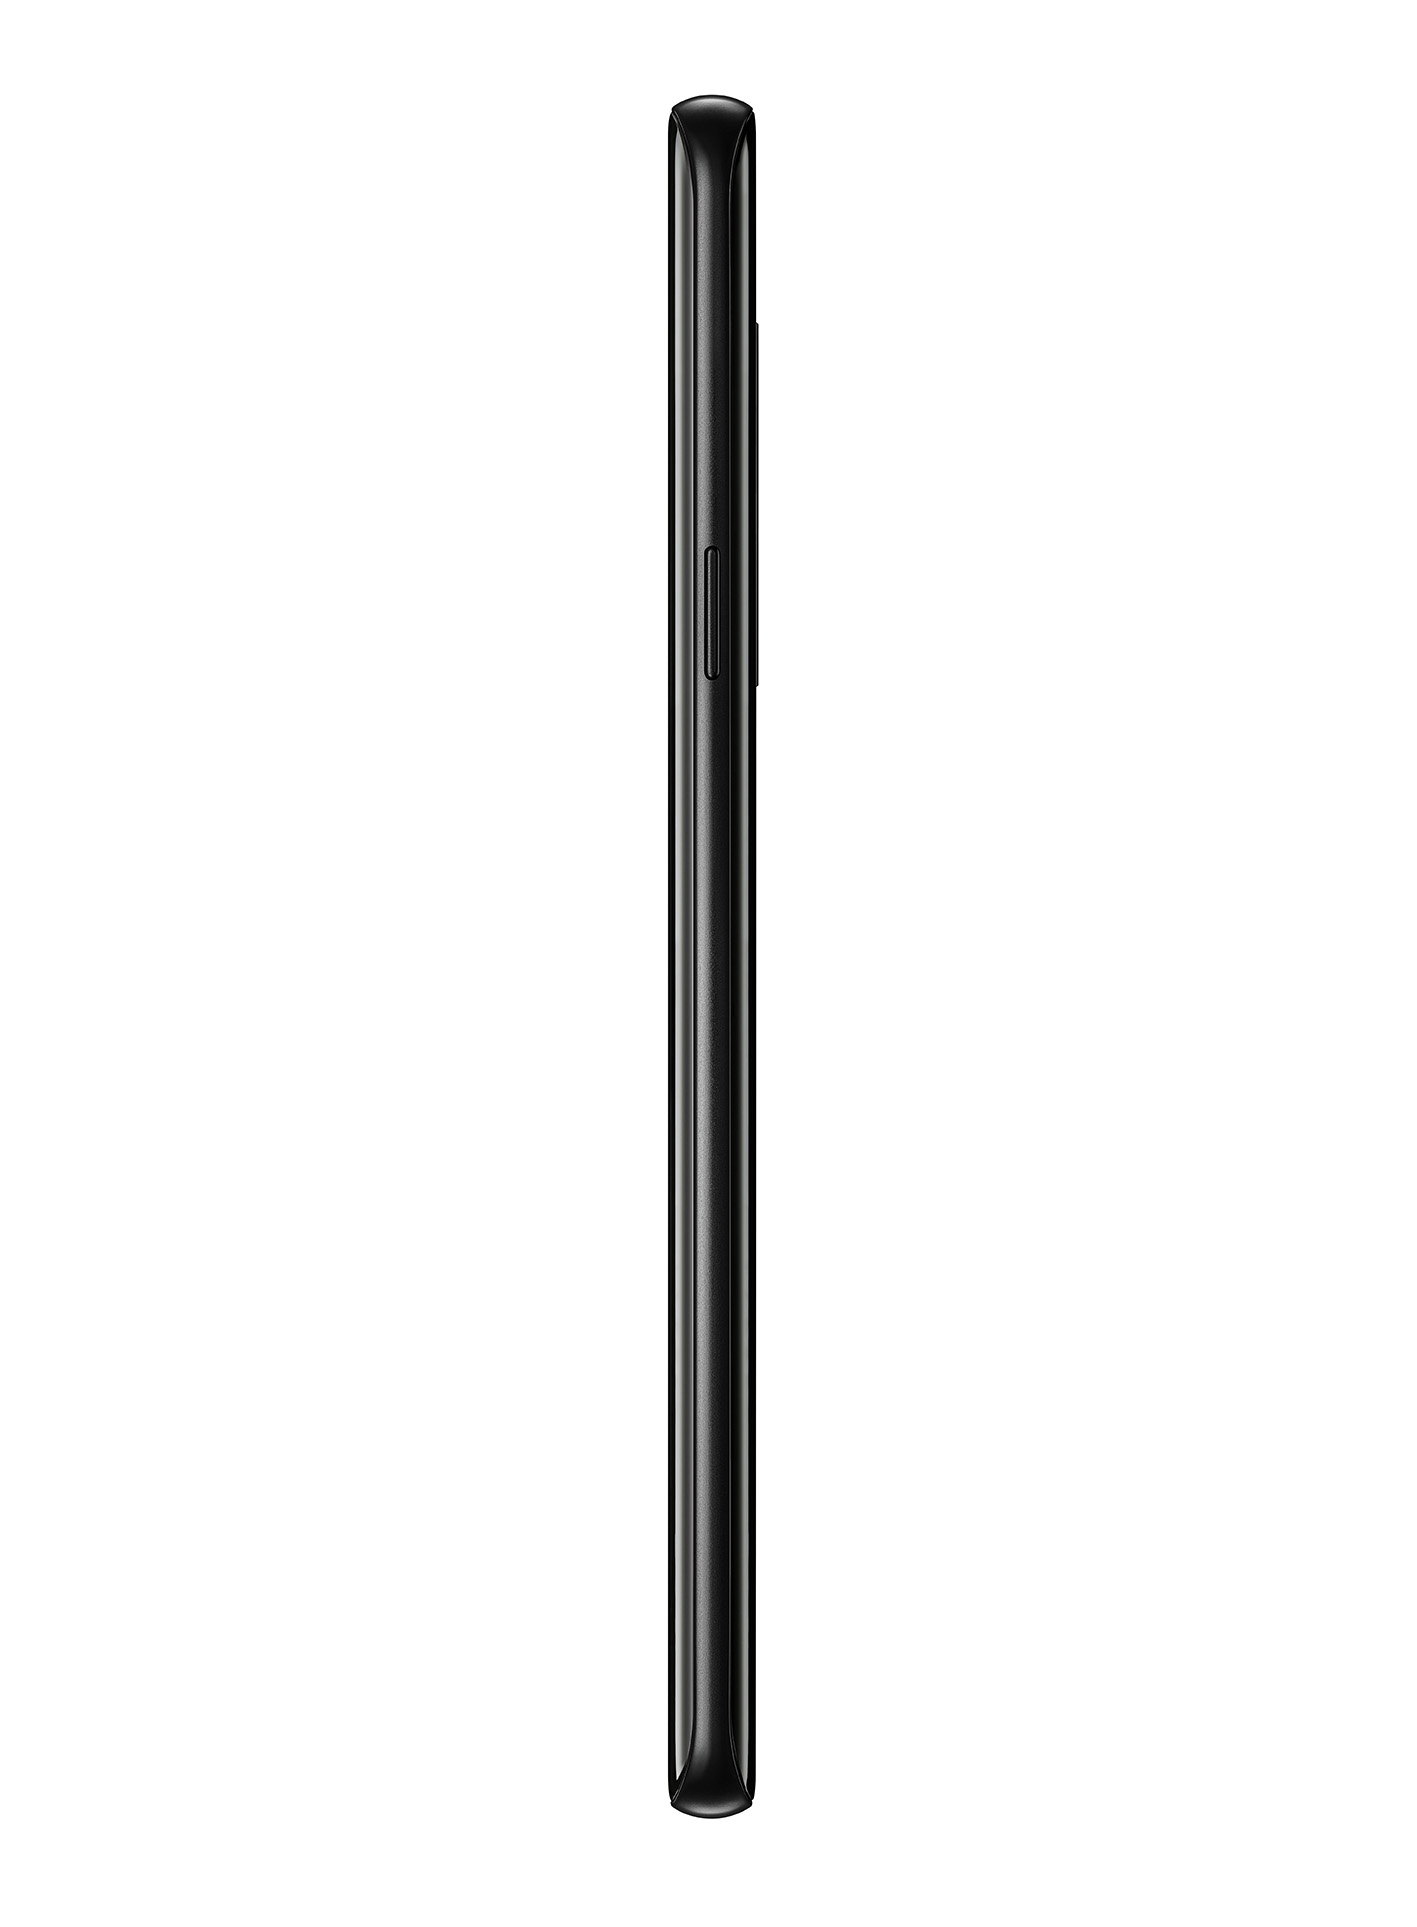 Straight Talk Samsung Galaxy S9+, 64GB, Black - Prepaid Smartphone - image 11 of 12